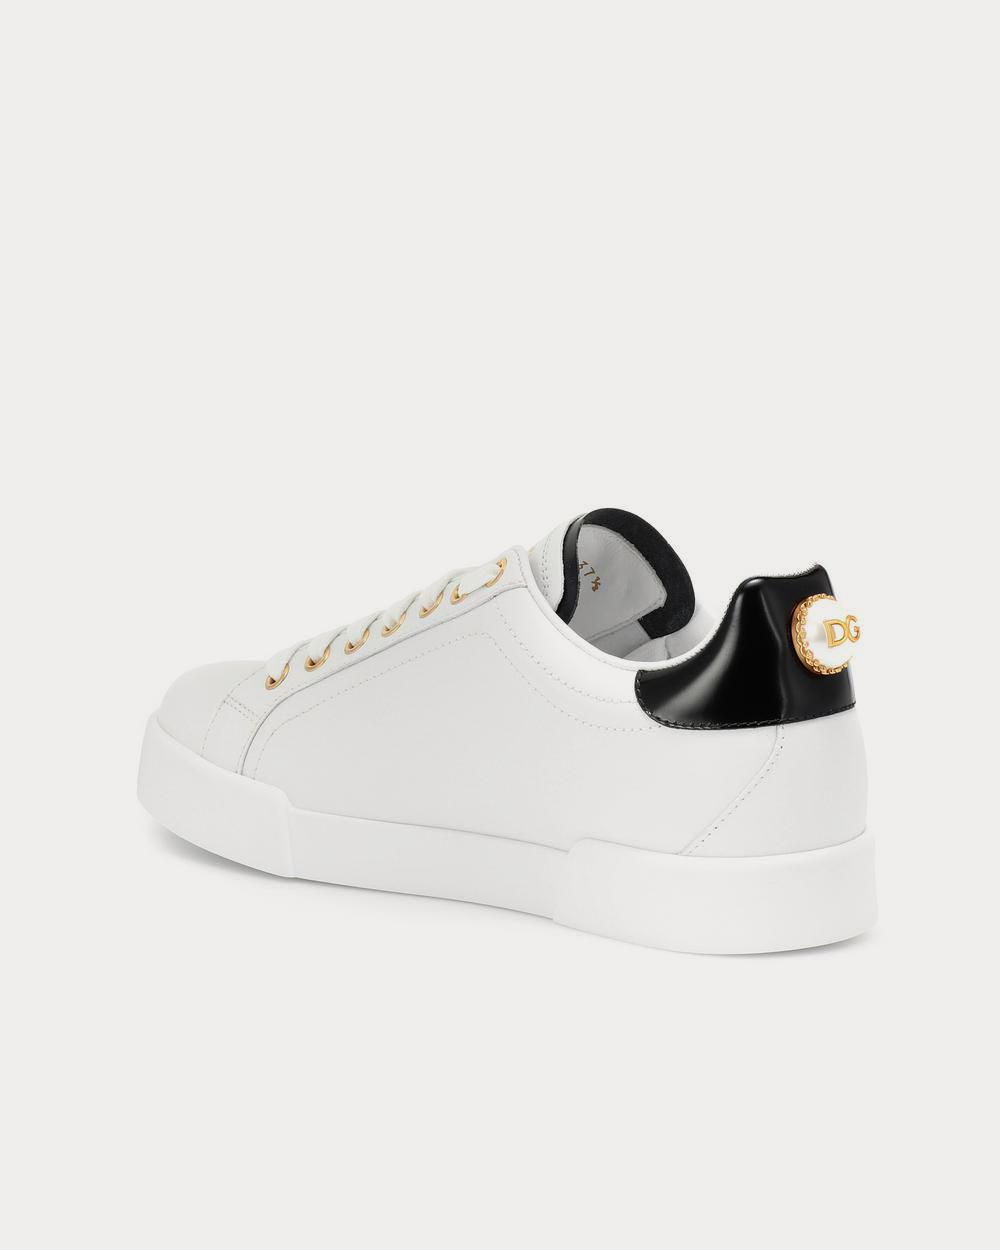 Dolce & Gabbana - Portofino leather white gold Low Top Sneakers